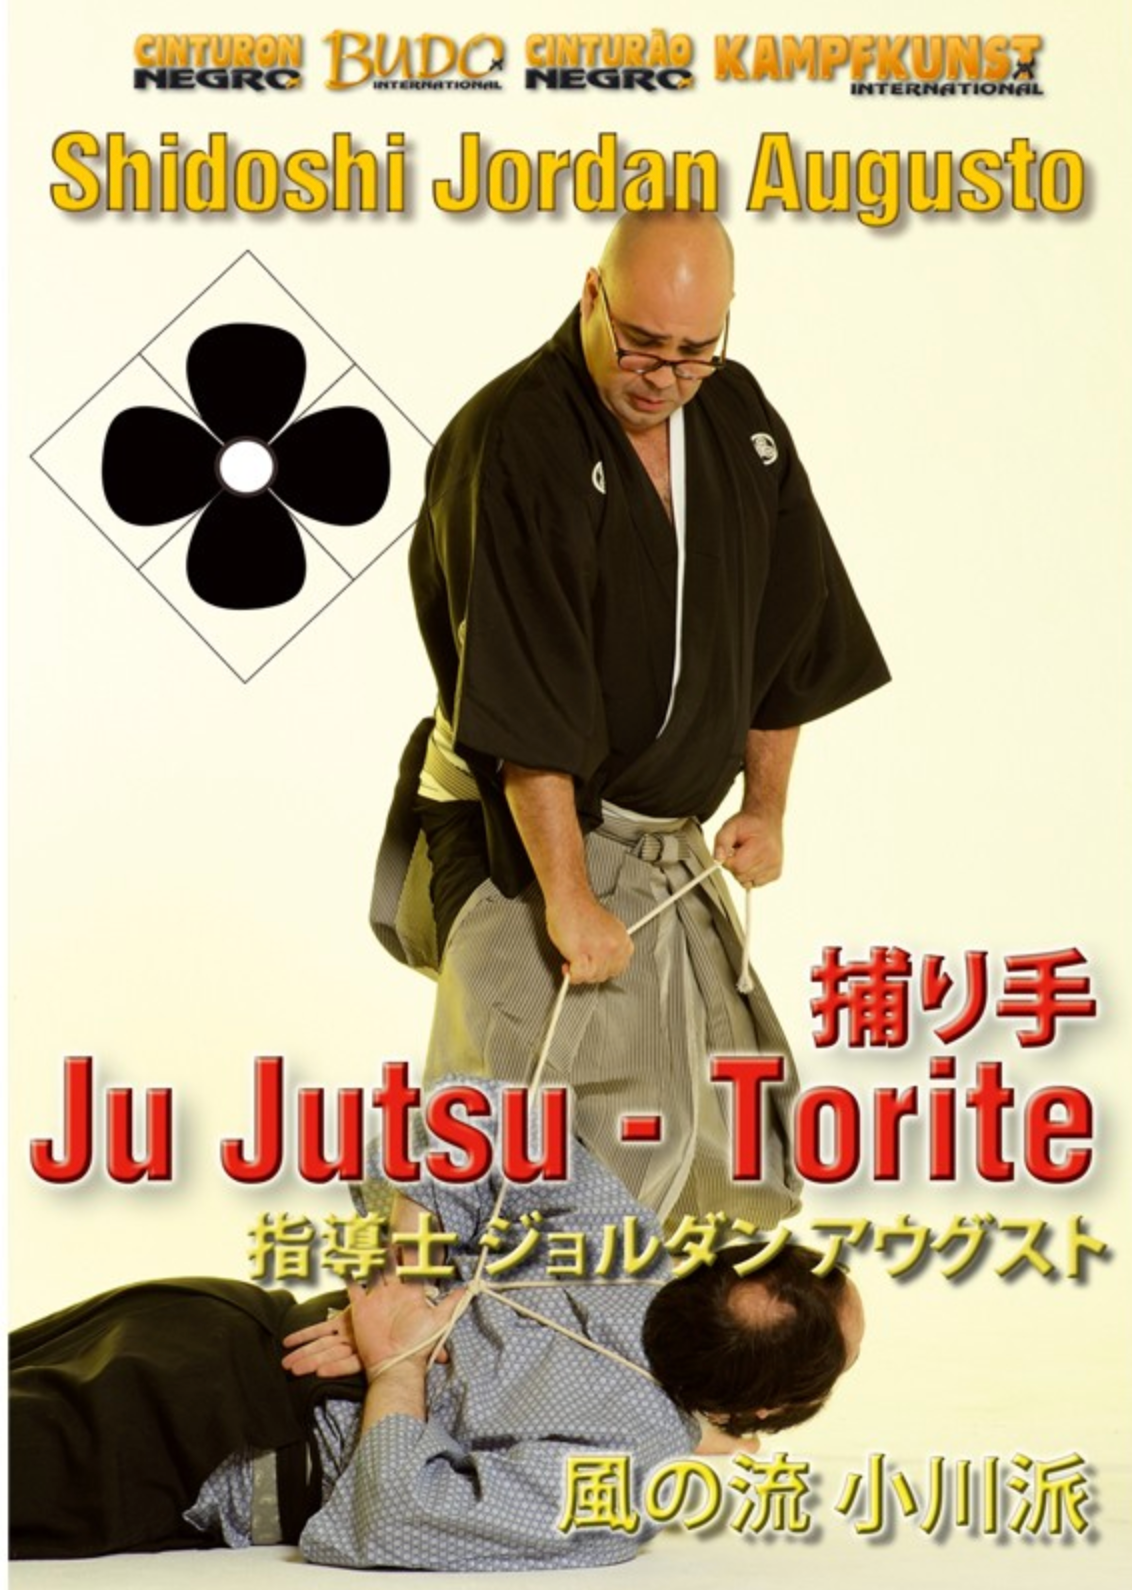 Ju-Jutsu Torite DVD by Jordan Augusto - Budovideos